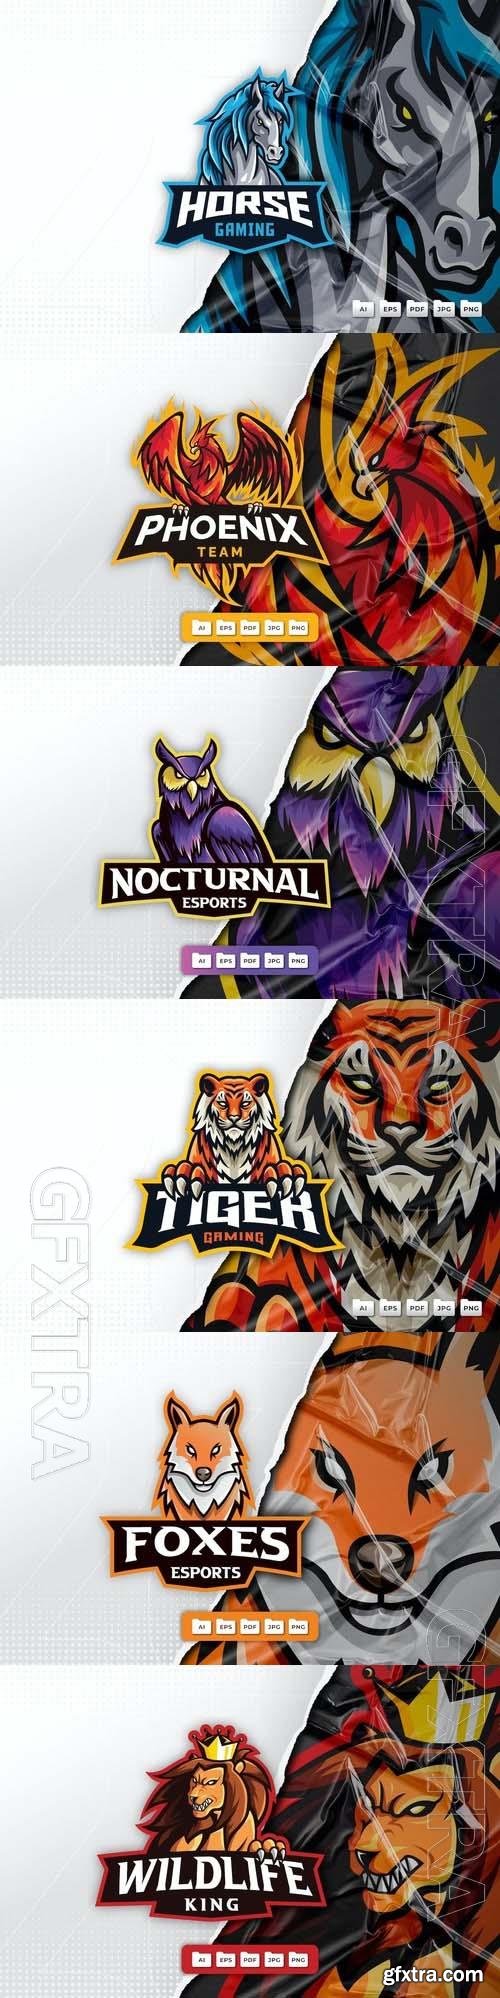 Tiger, phoenix, nocturnal bird, lion, horse, fox, mascot logo design